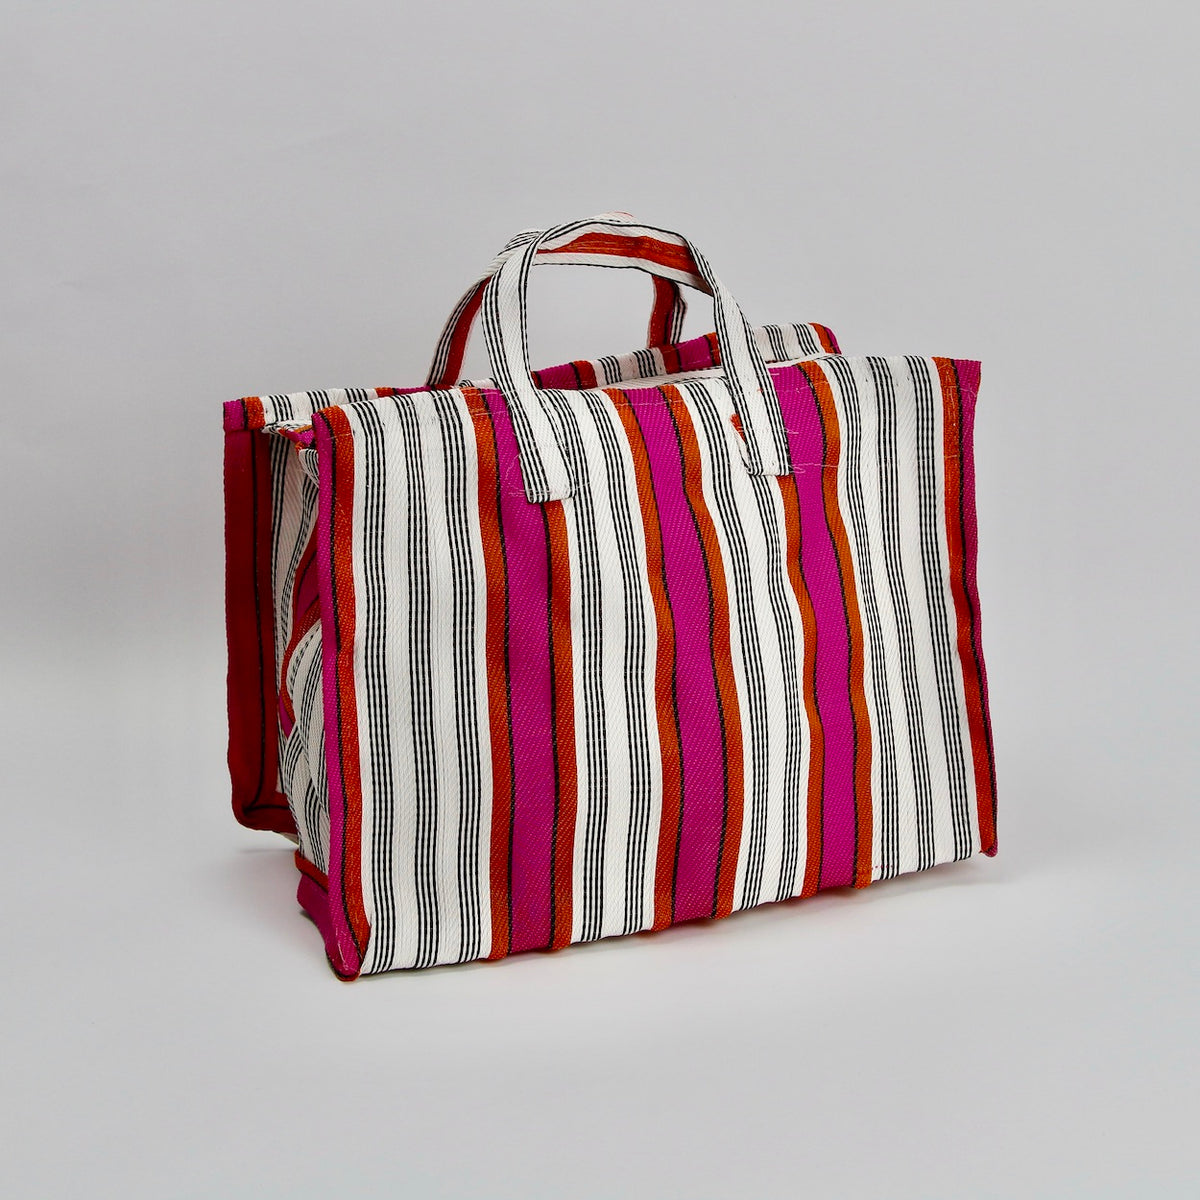 Size 1 Striped Market Bag - Fuchsia/Orange/Black/White